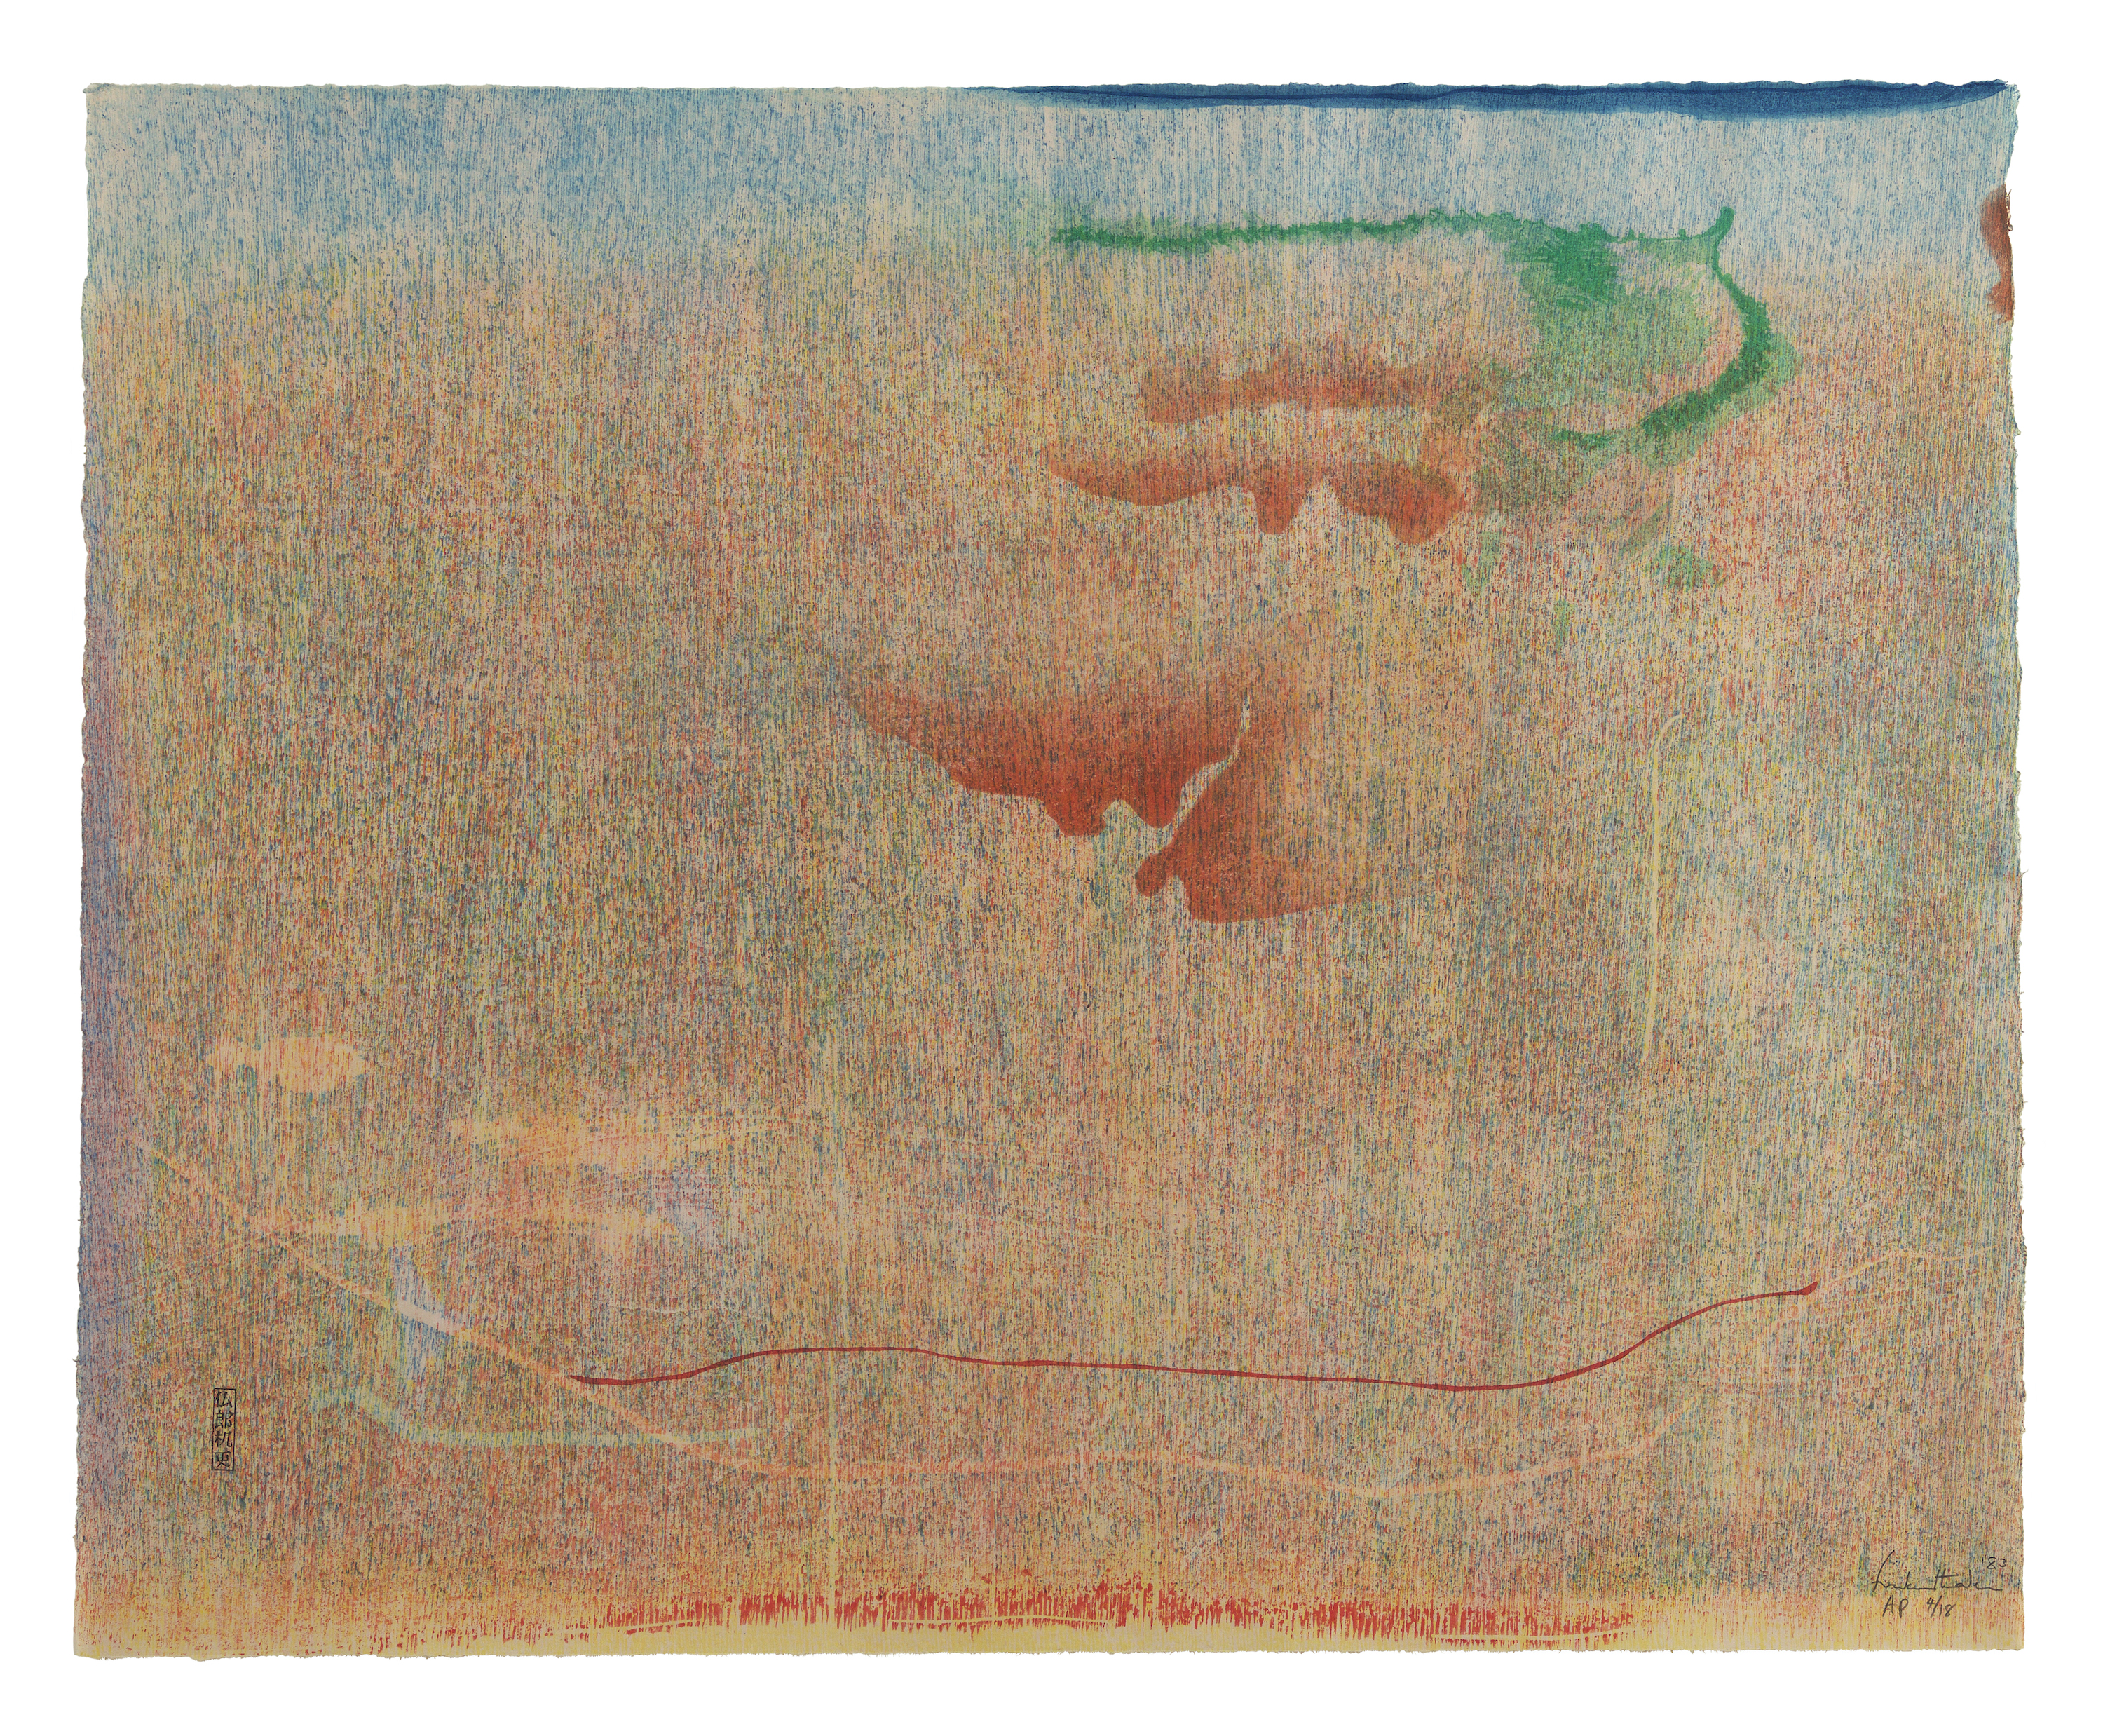 Sedir Tepesi (orig. "Cedar Hill") by Helen Frankenthaler - 1983 - 51.4 x 62.9 cm 